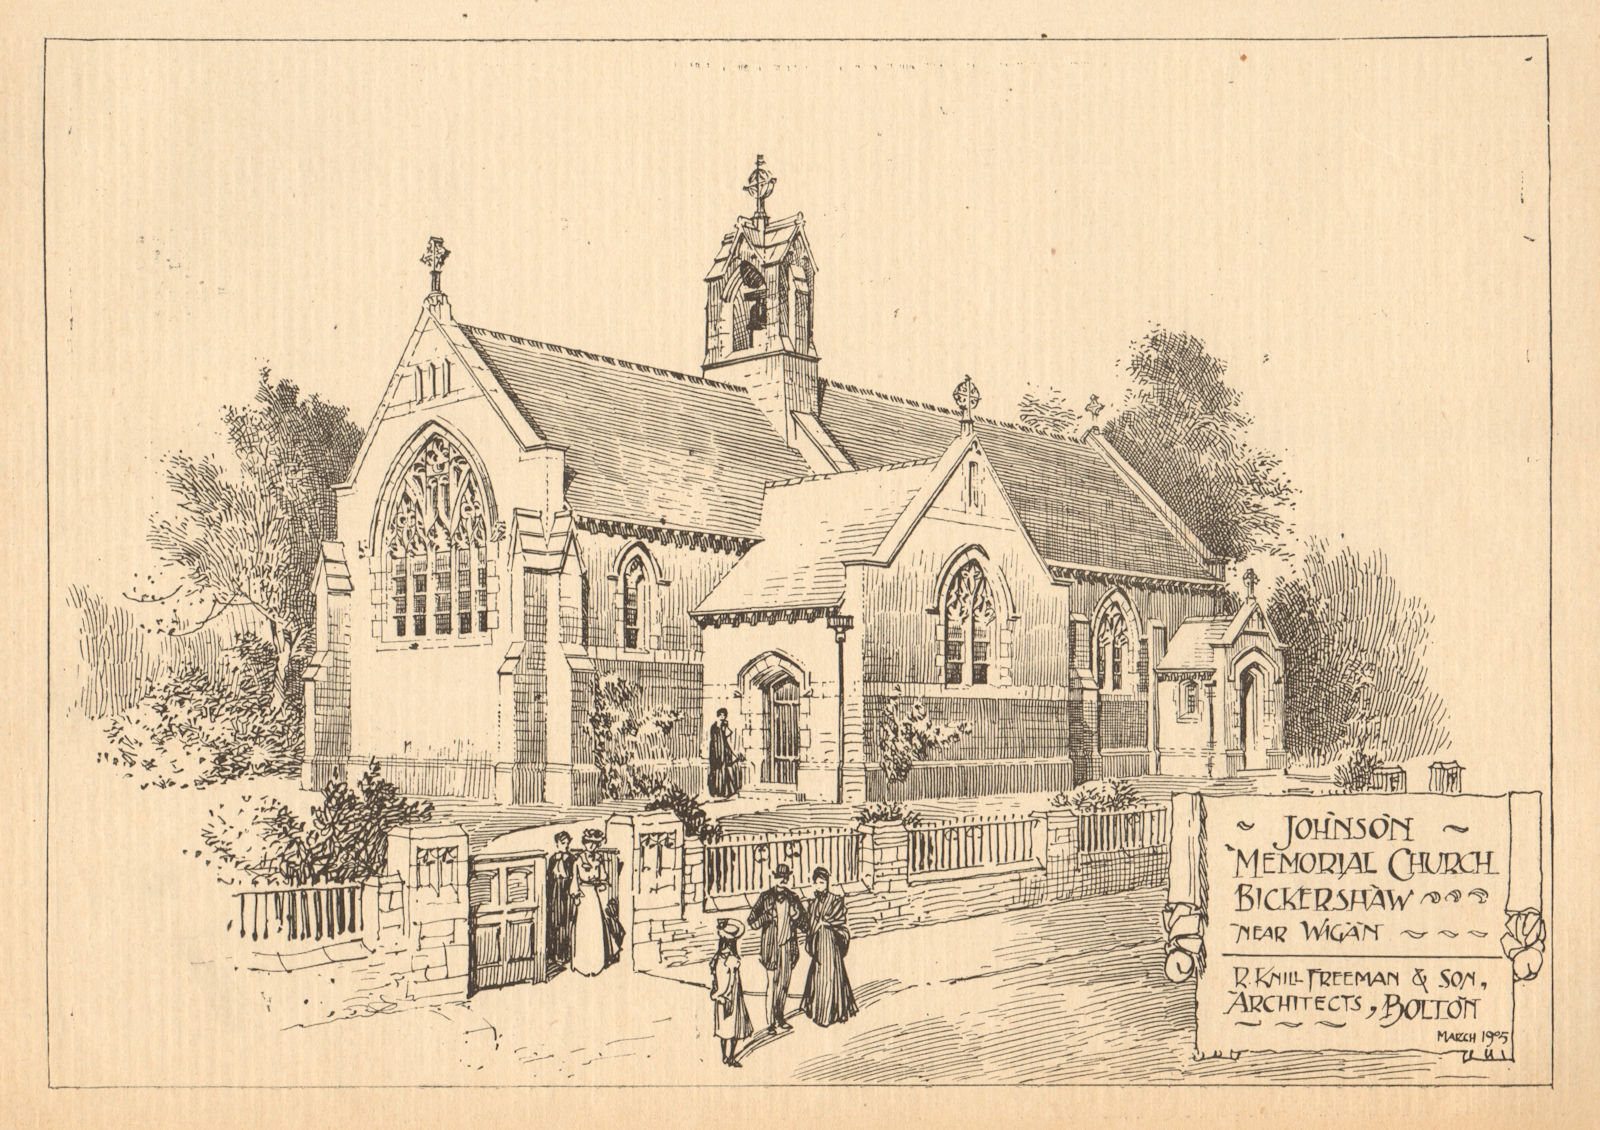 Associate Product Johnson Memorial Church, Bickershaw nr Wigan. R. Knill Freeman, Architects 1905